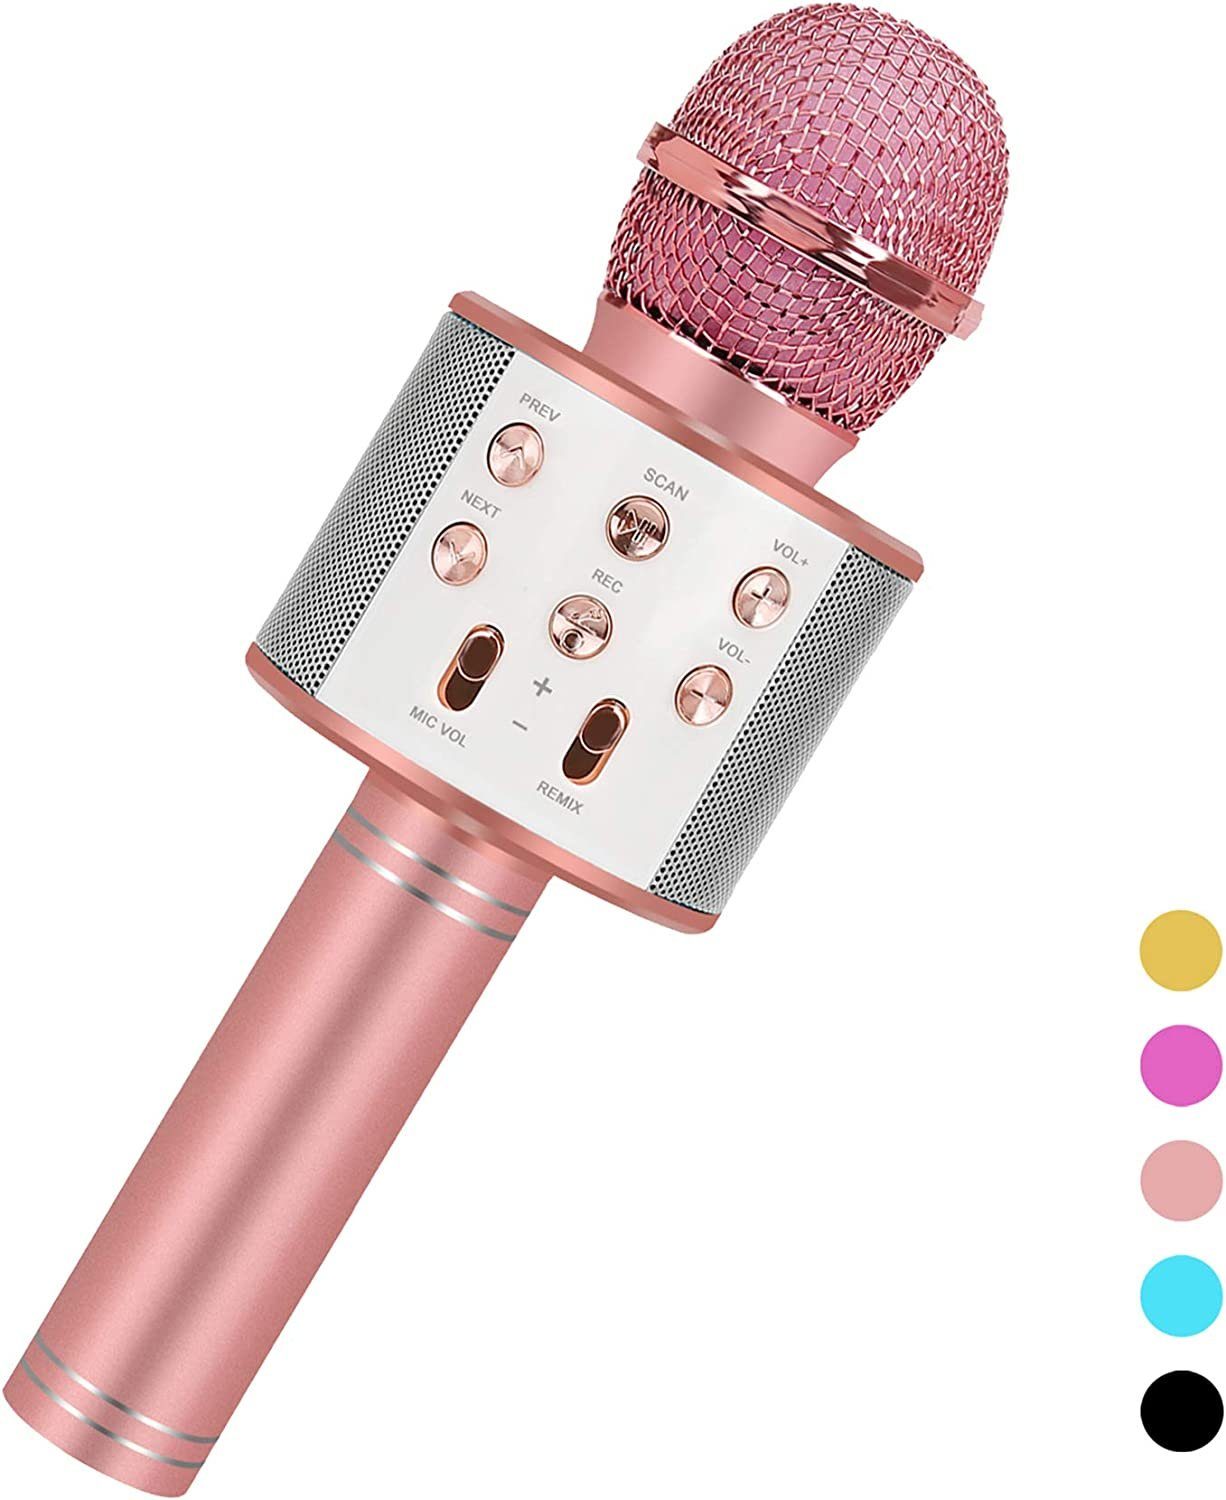 longziming Mikrofon »Karaoke Mikrofon, LED Drahtloses Bluetooth Mikrofon  zum Singen mit Lautsprecher, Karaoke Spielzeug Kinder, Heim KTV Karaoke  Maschine, Tragbares KTV Lautsprecher Recorder für  Android/iPhone/iPad/PC(Rose Gold)«